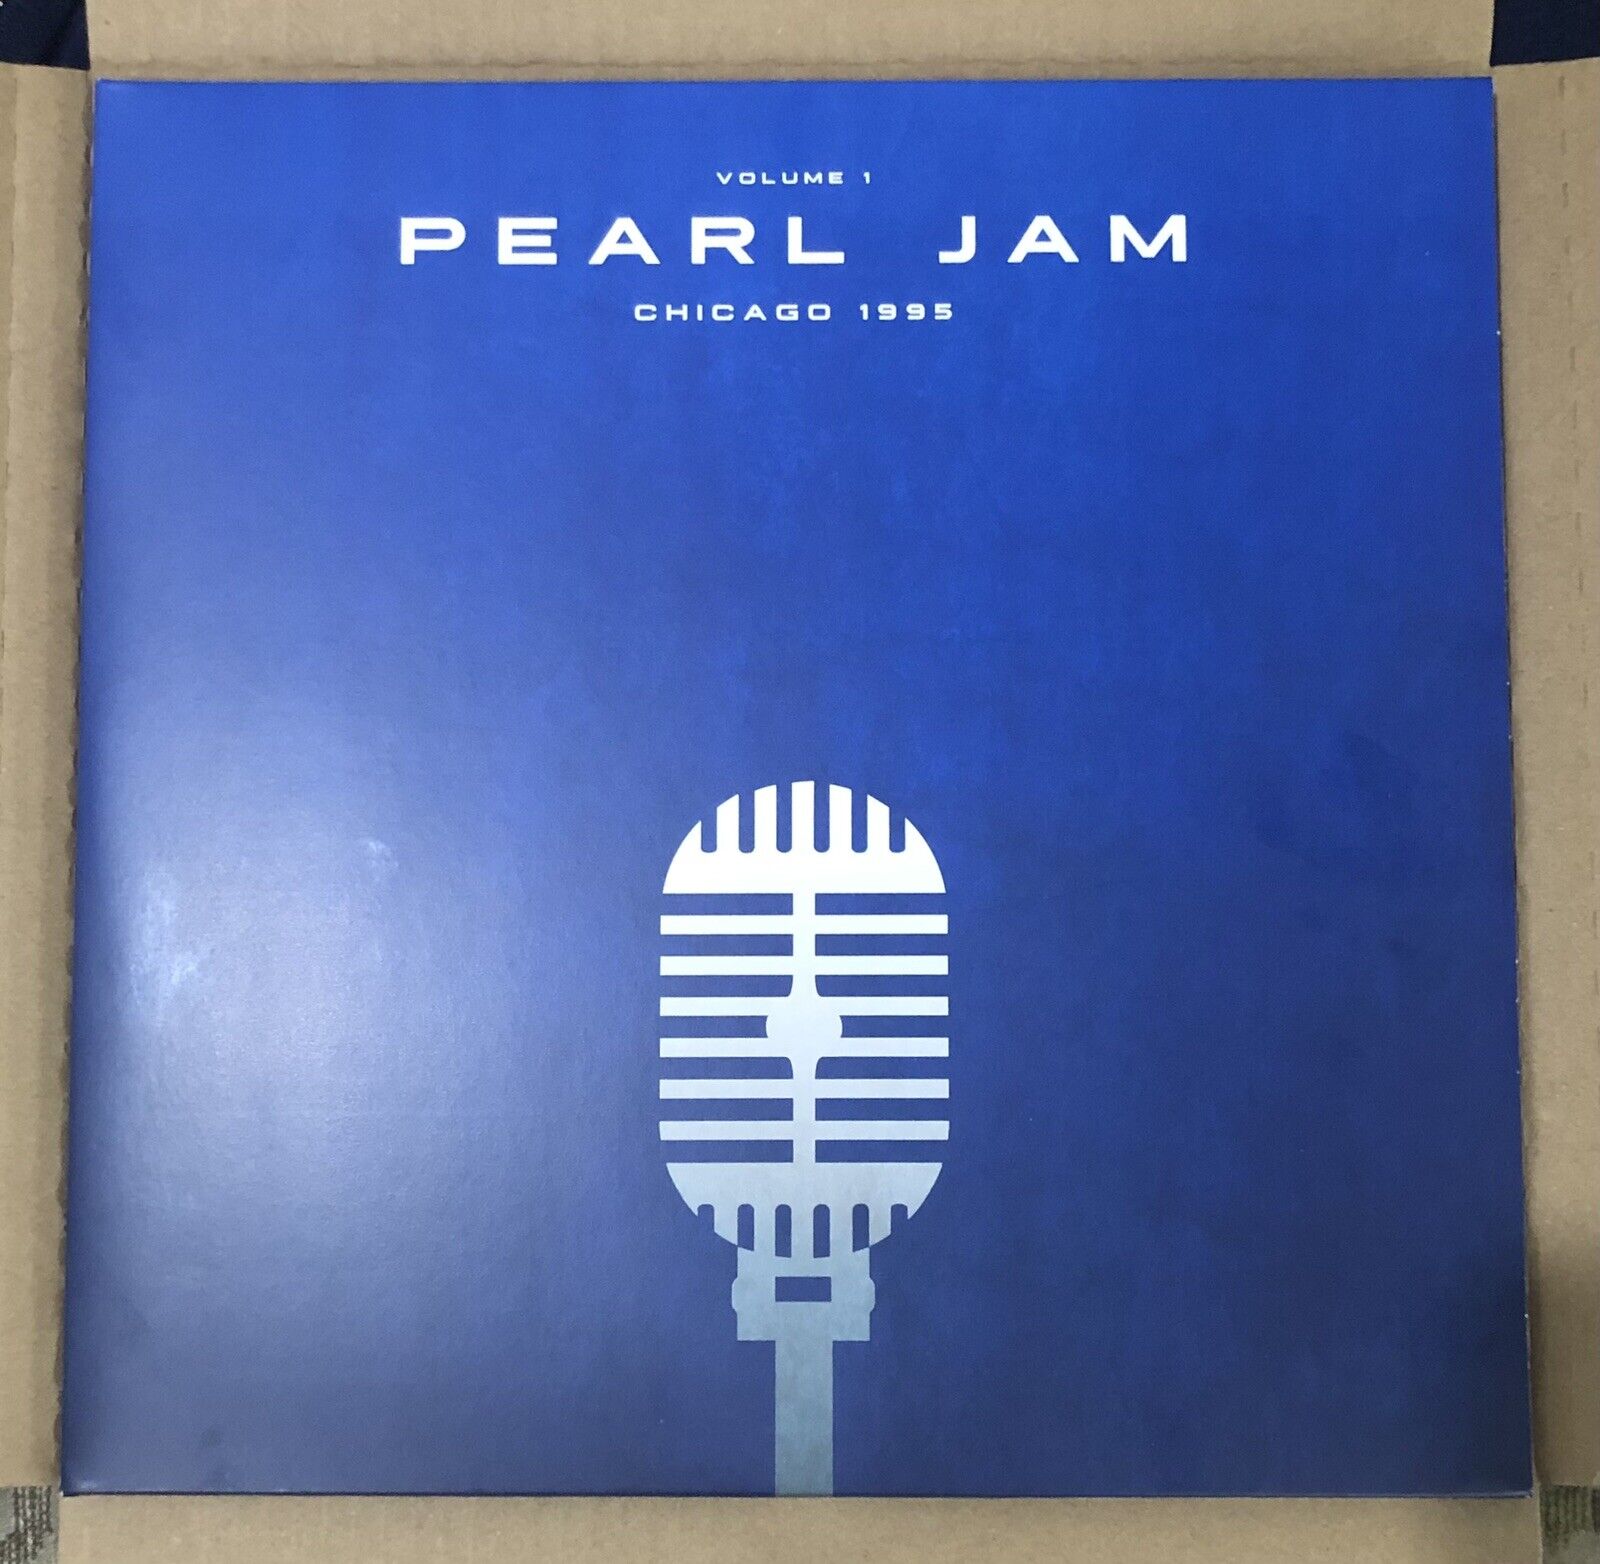 PEARL JAM CHICAGO 1995 VOLUME 1 and 2 LP Vinyl Record Eddie Vedder Clear Vinyl